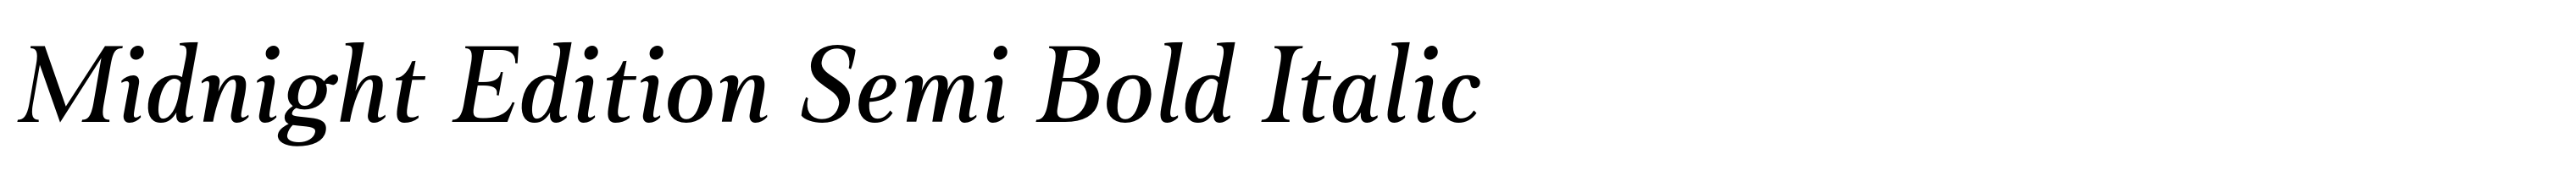 Midnight Edition Semi Bold Italic